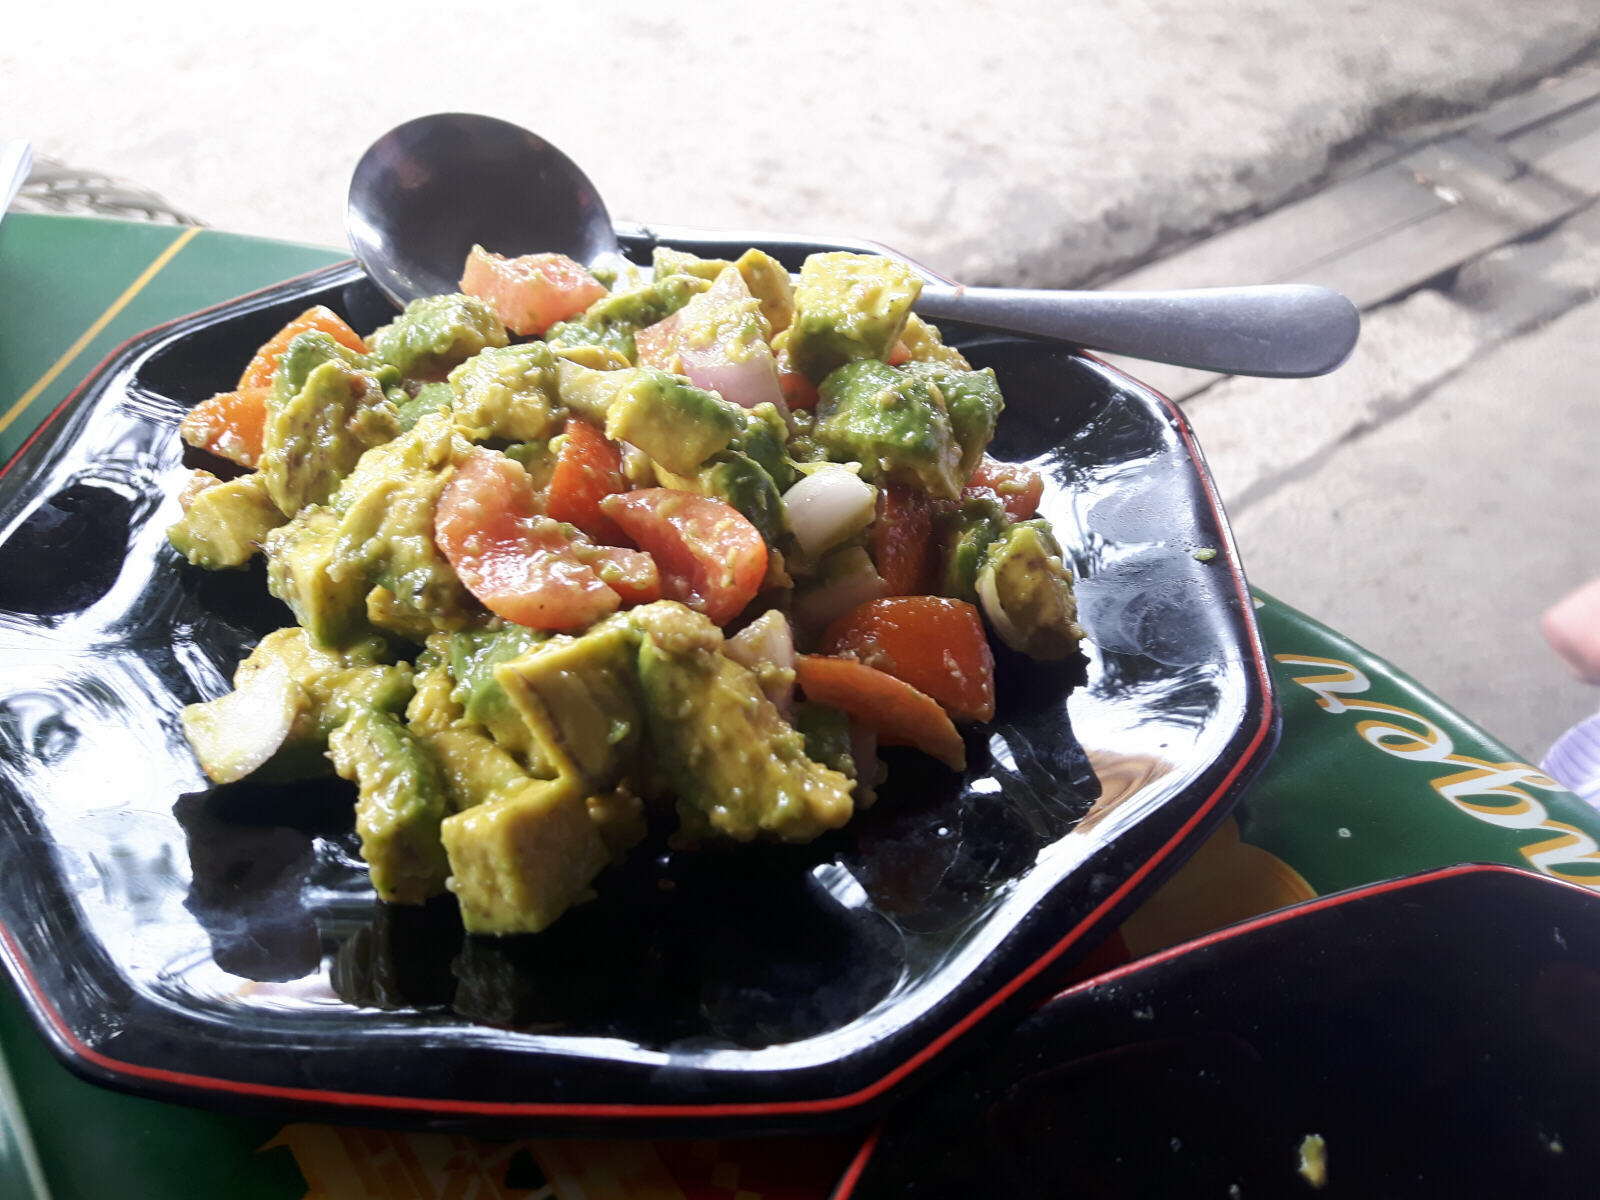 Avocado salad in Hyoo Myat restaurant in Nyaungshwe